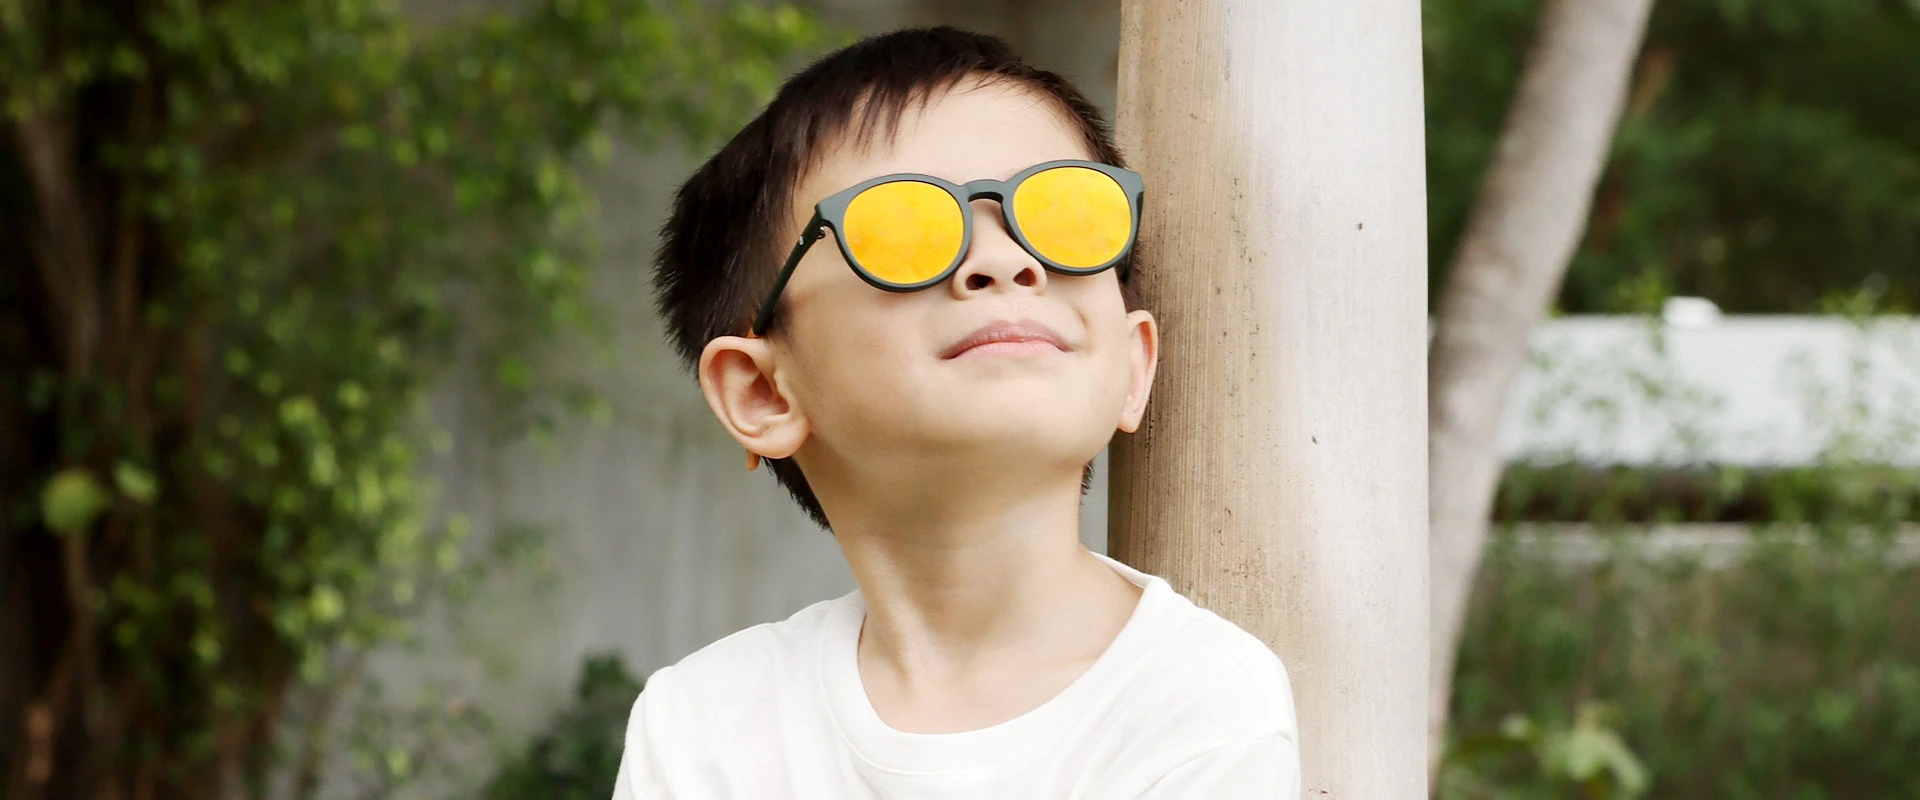 a kid wearing sunglasses